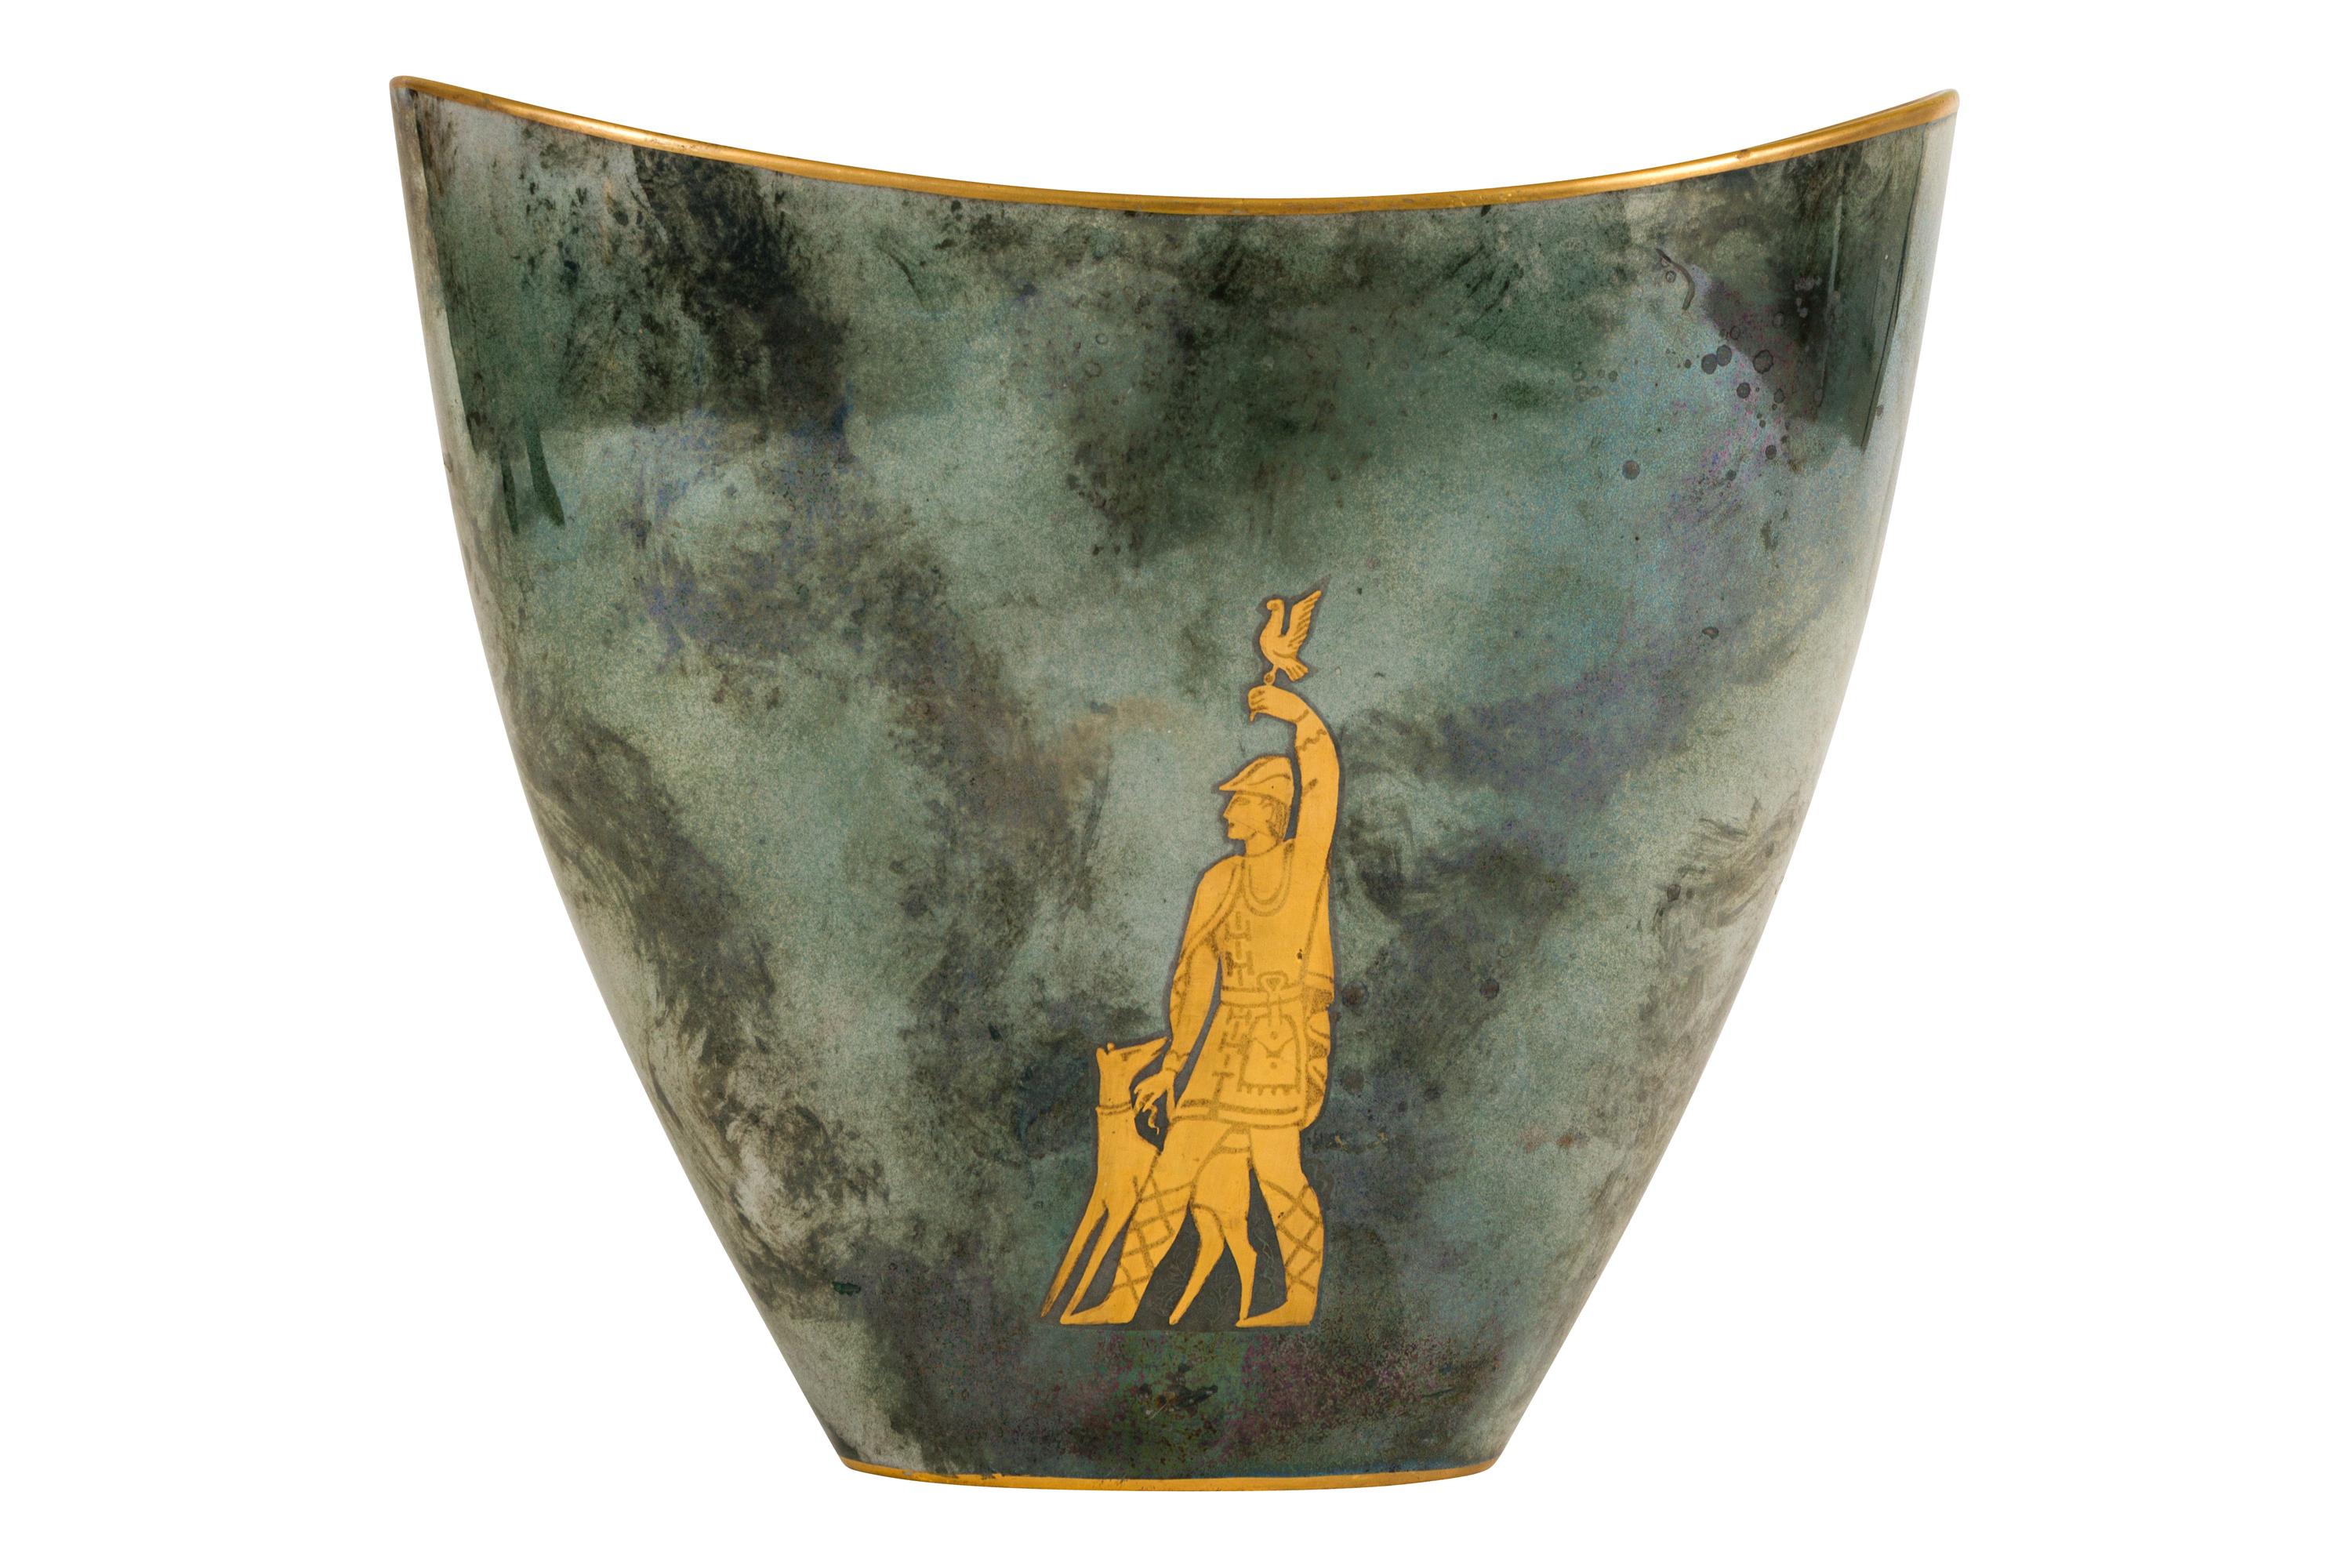 Italian Arrigo Finzi Greco-Roman Motif Gold Porcelain Vase for Oro Zecchino, Italy 1950s